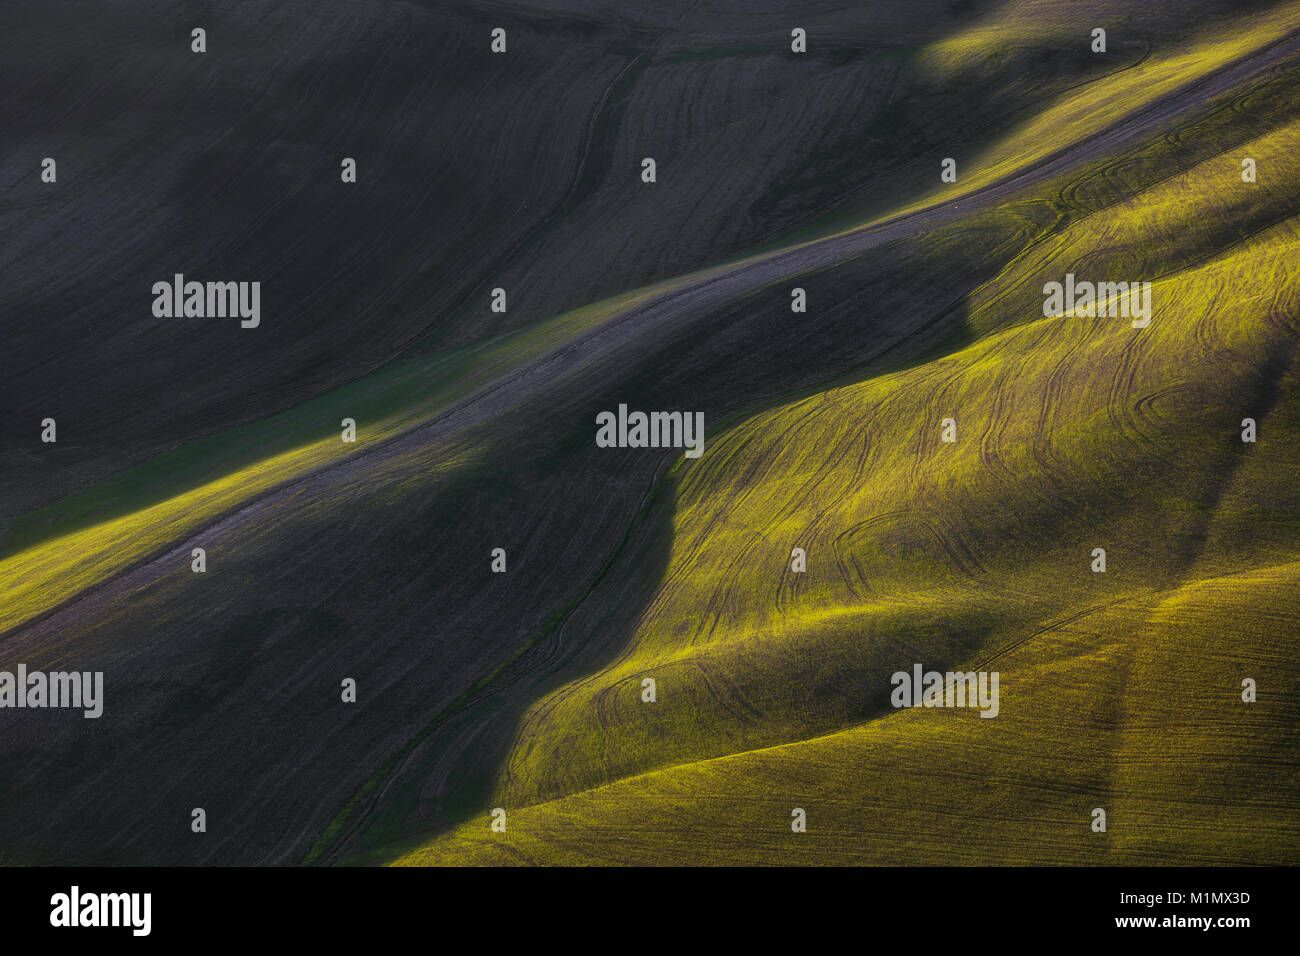 Abstrakte Frühling Landschaft, grüne Wiesen und Traktor Titel Textur bei Sonnenuntergang. Toskana Hügel, Italien Stockfoto